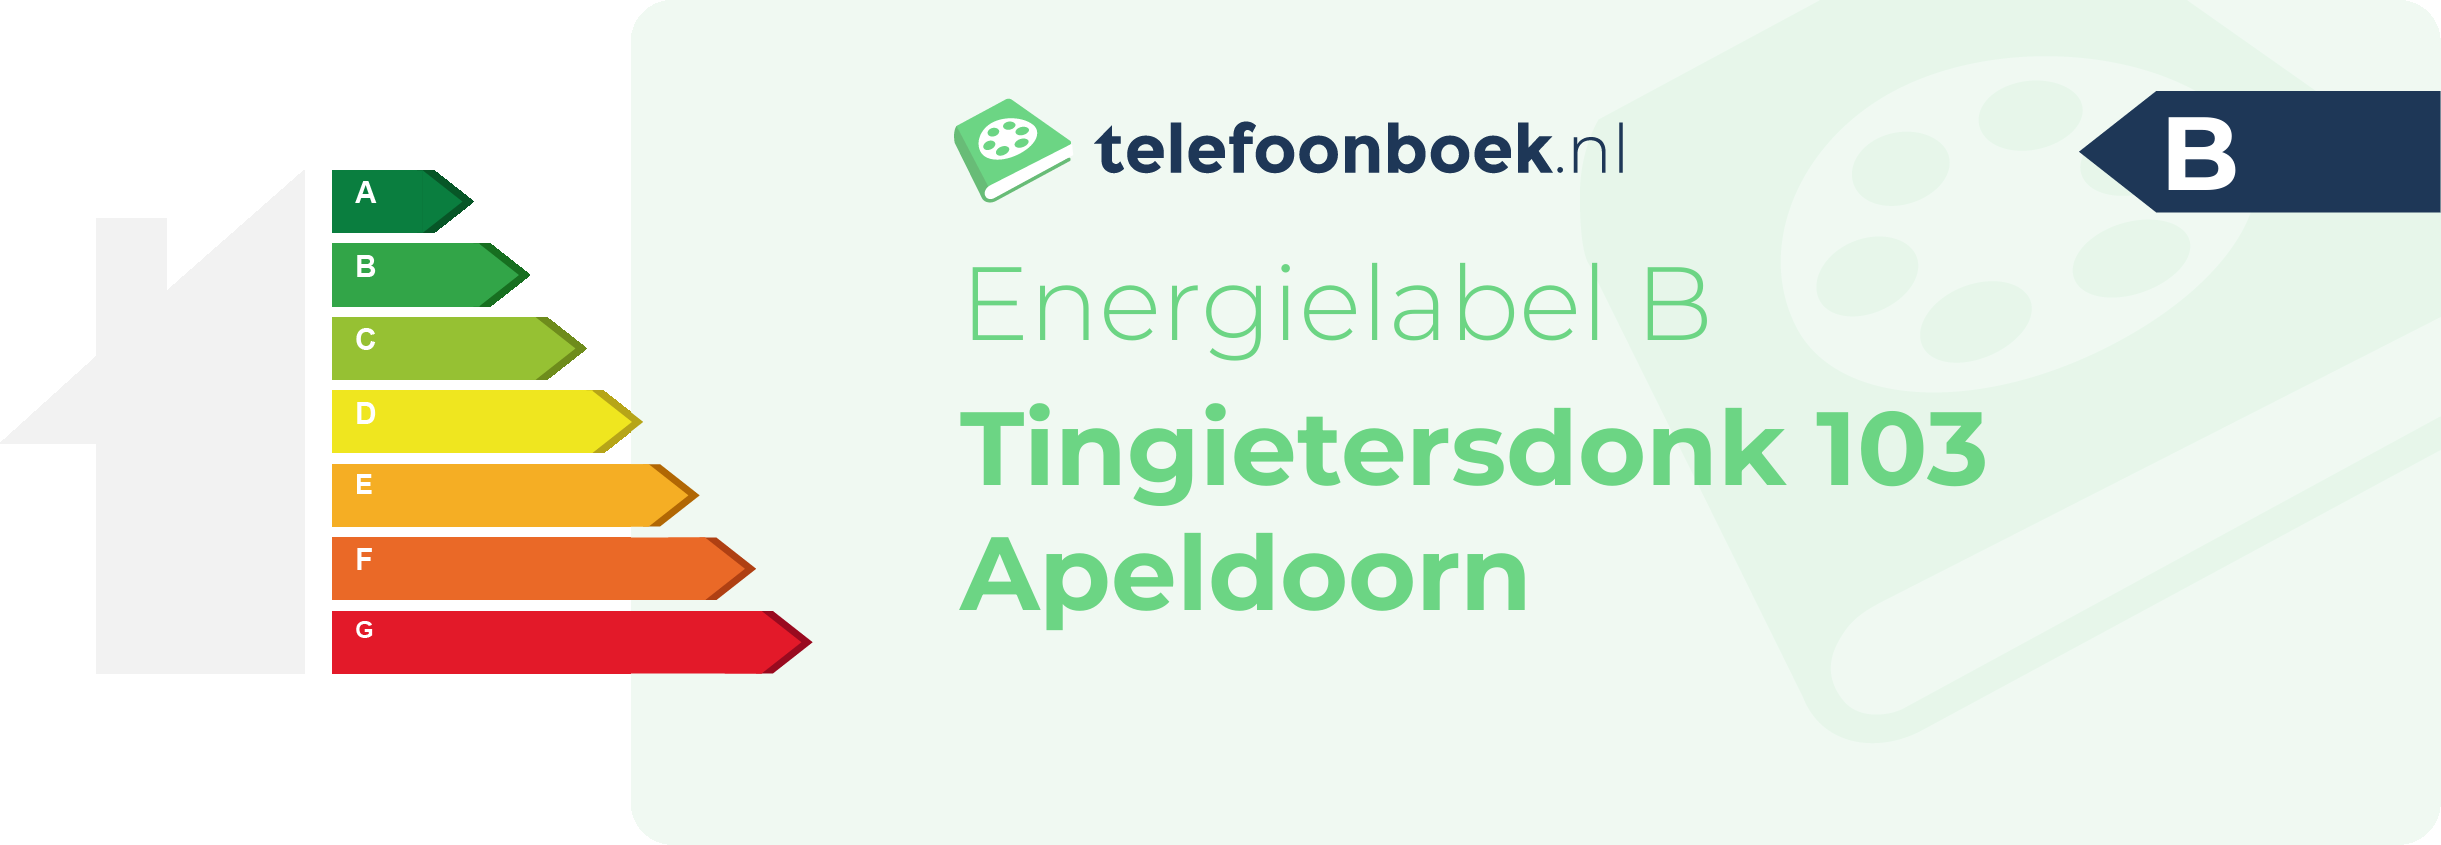 Energielabel Tingietersdonk 103 Apeldoorn